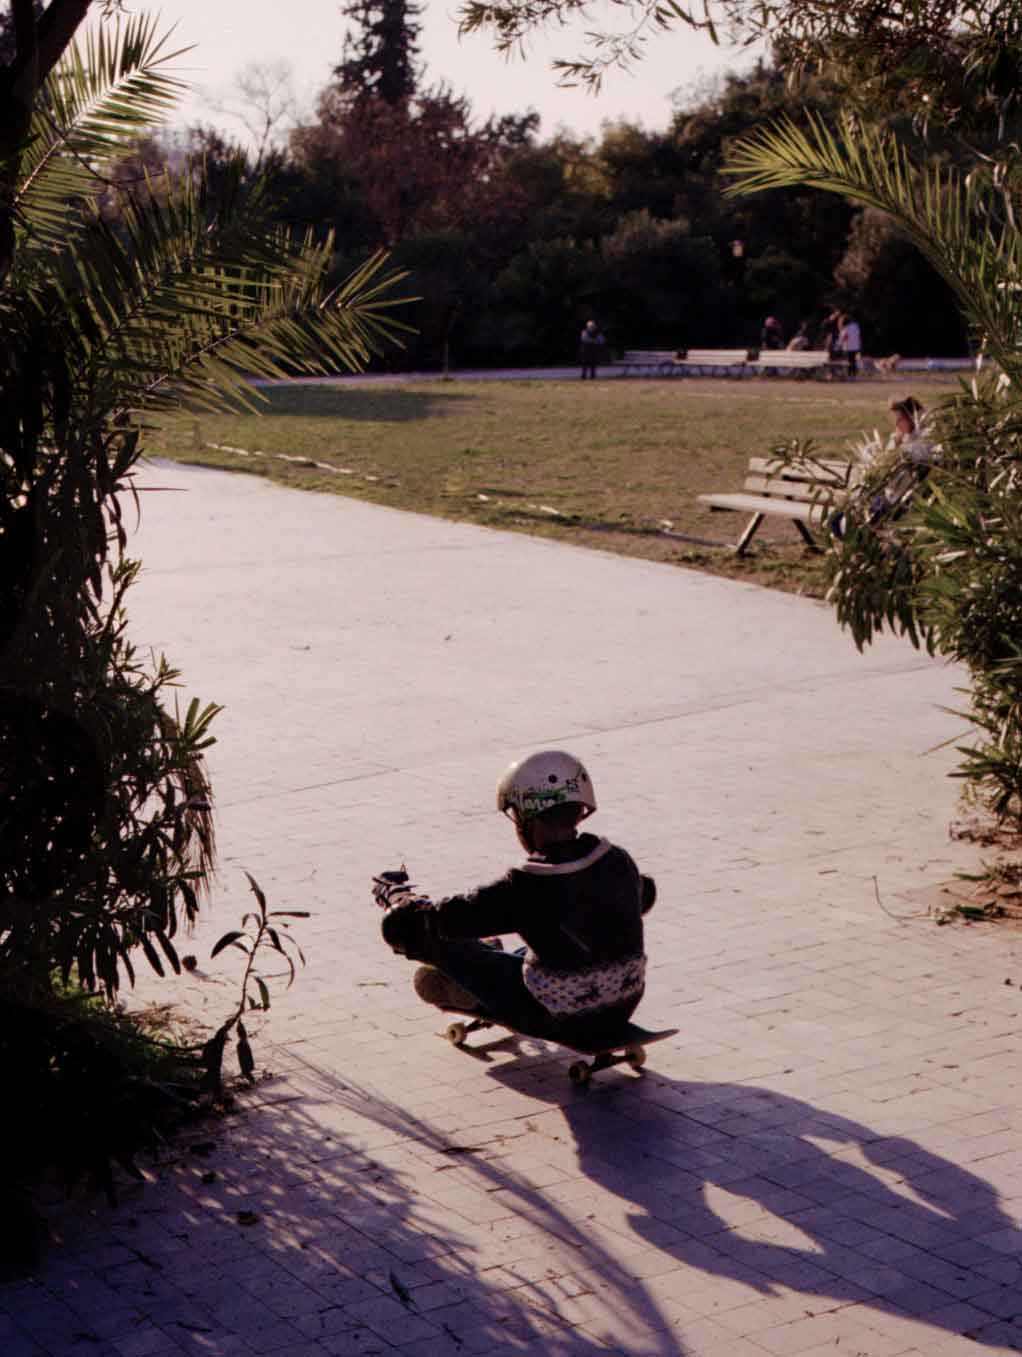 a refugee child on a skateboard